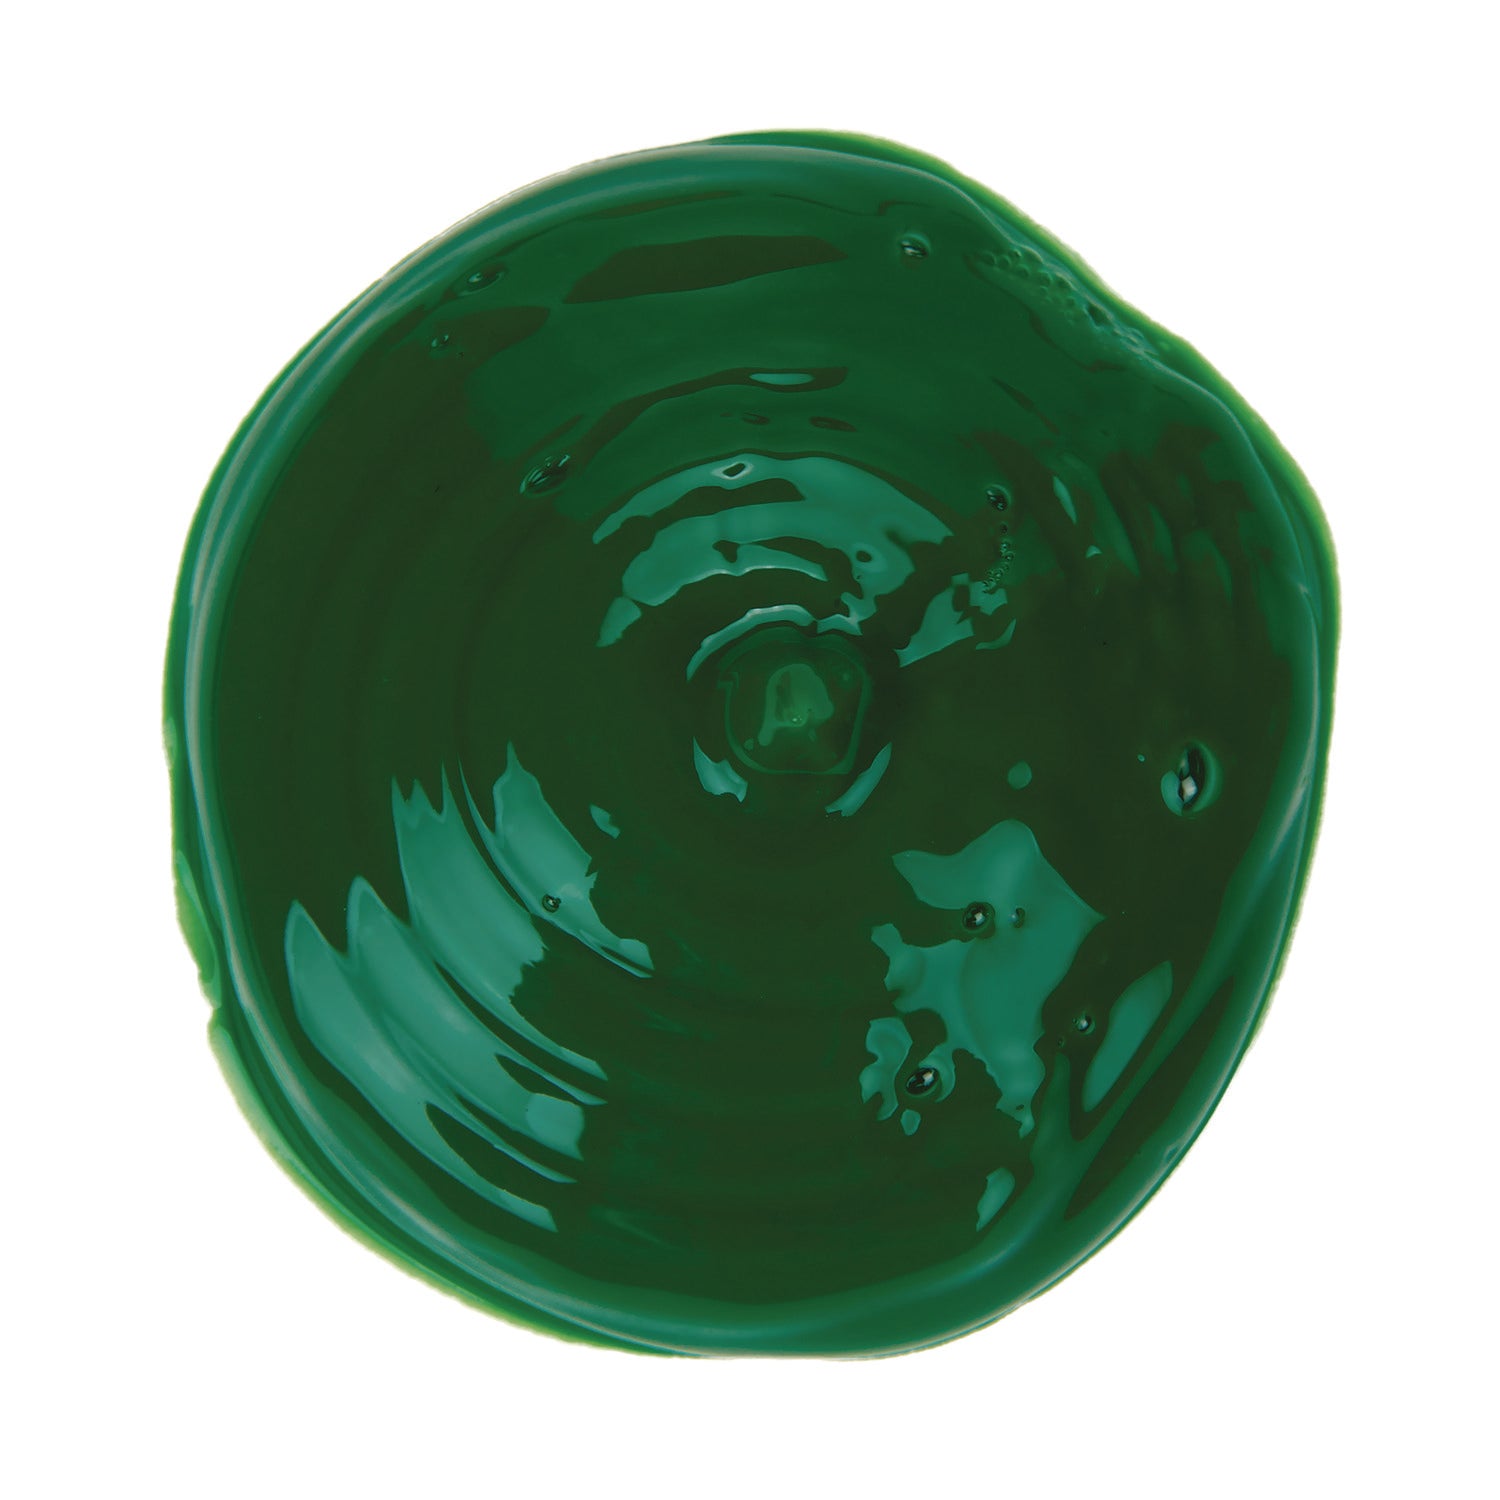 Washable Fingerpaint, Green, 16 oz Bottle - 